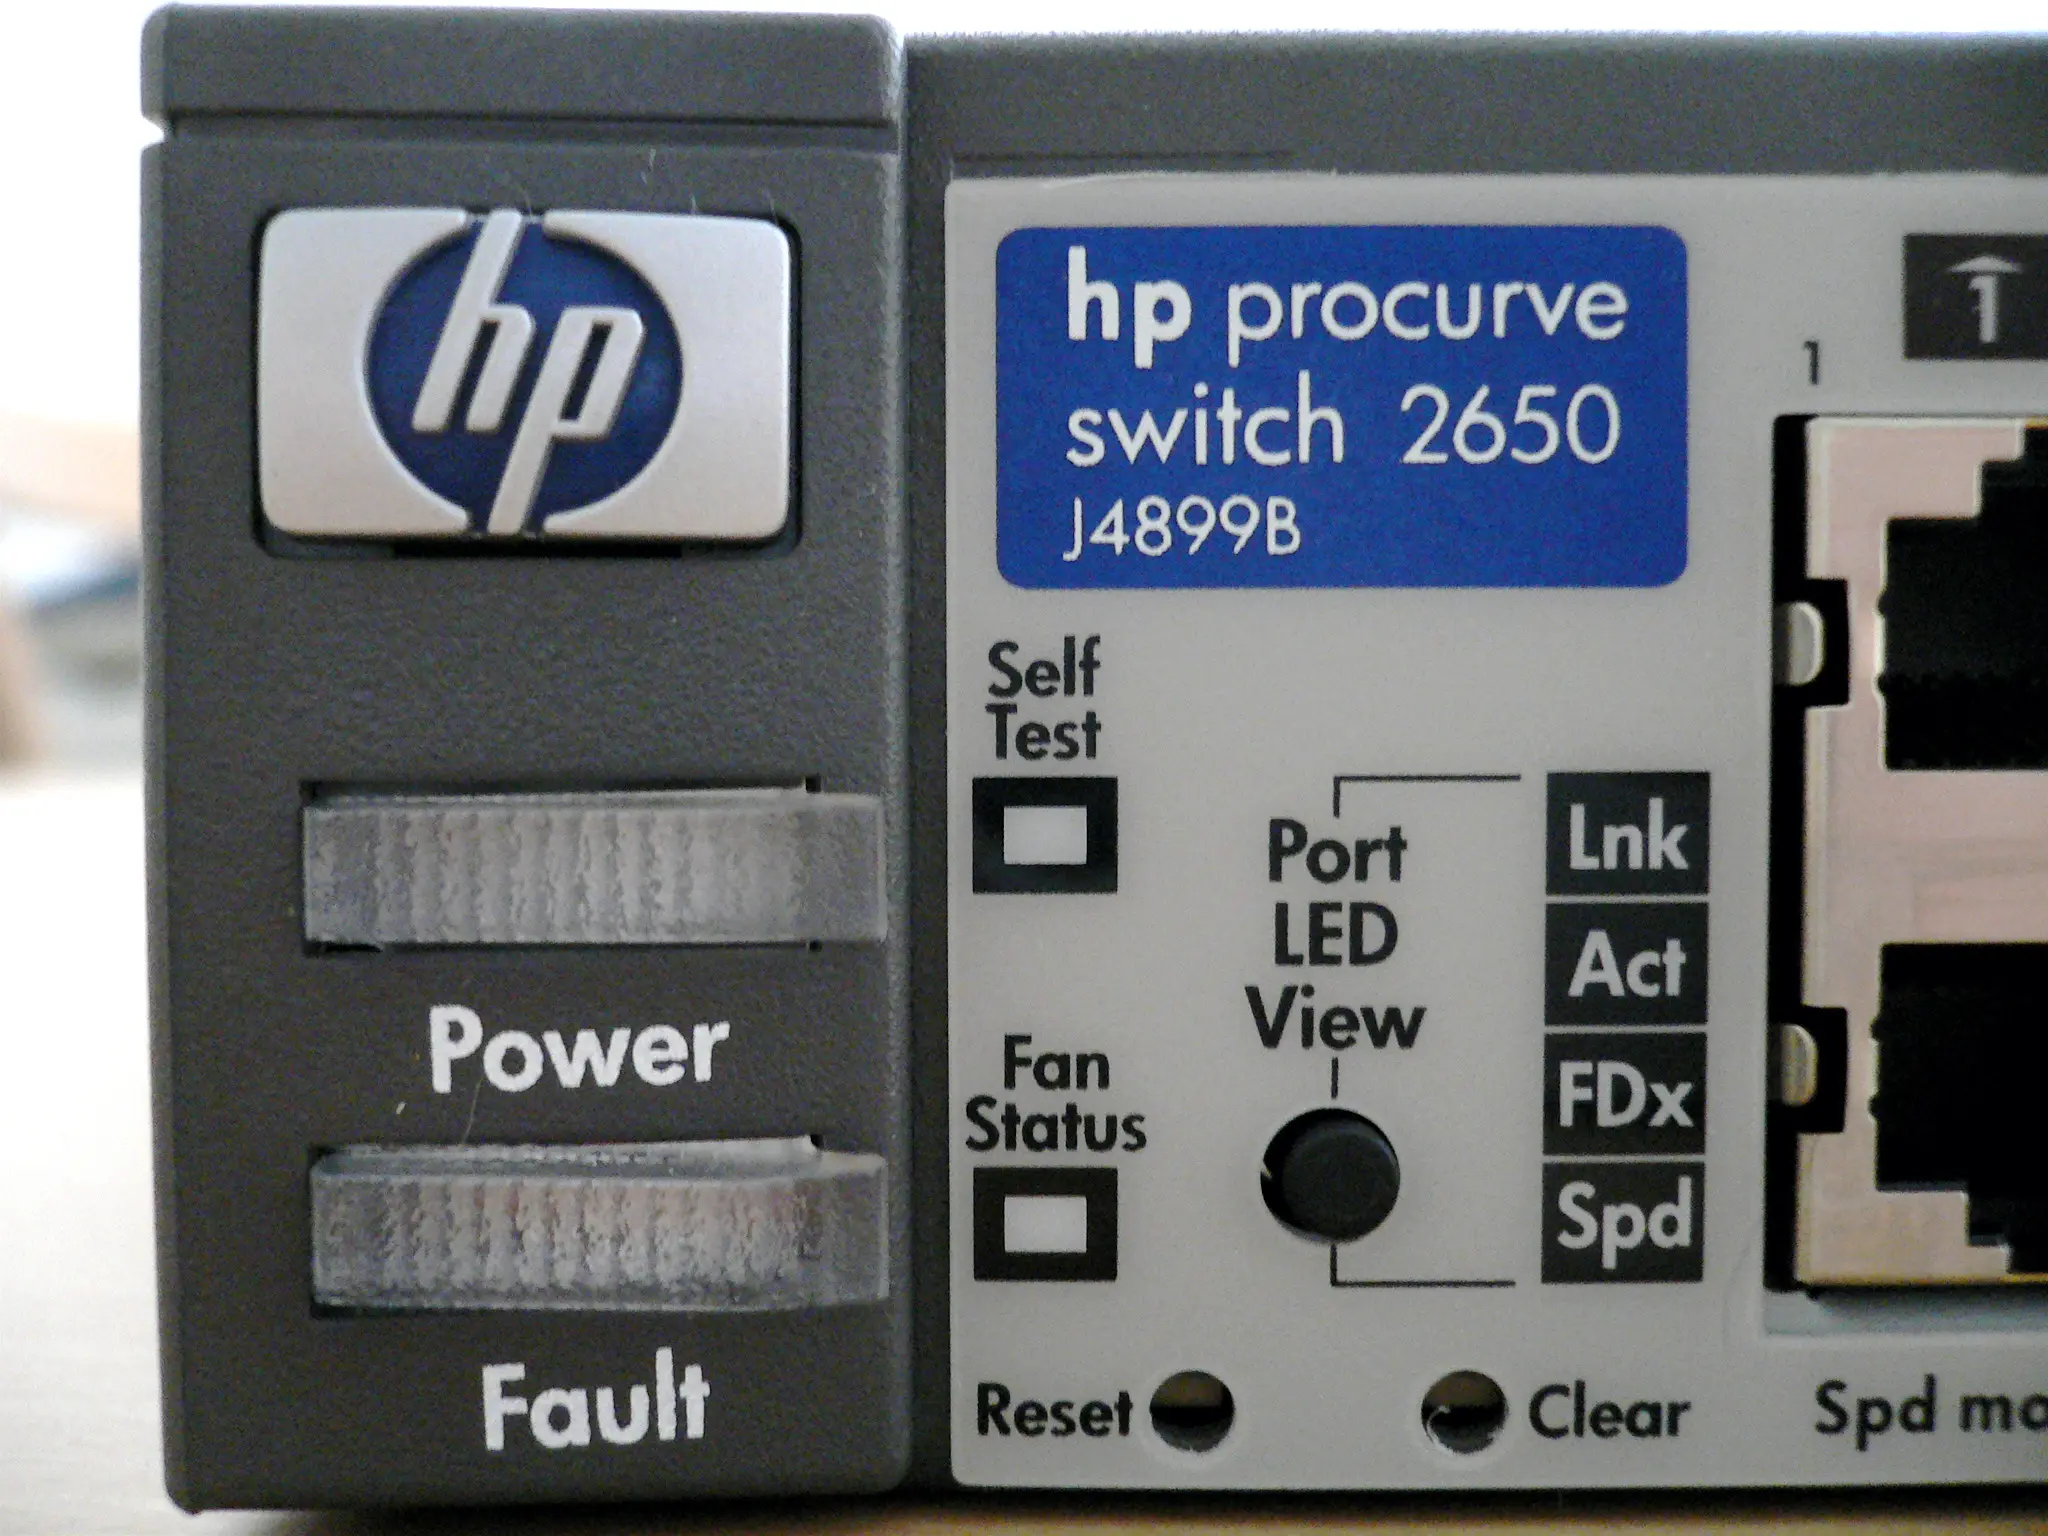 hewlett packard procurve - Are HP ProCurve switches good